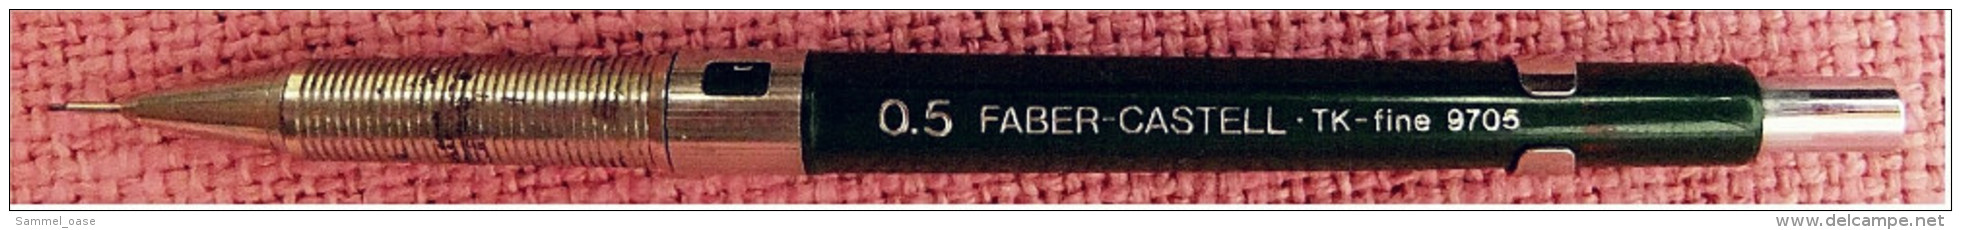 Alter Feinminenstift Faber Castell  -  TK-Fine 9705  -  Ca. 1965 - Schreibgerät